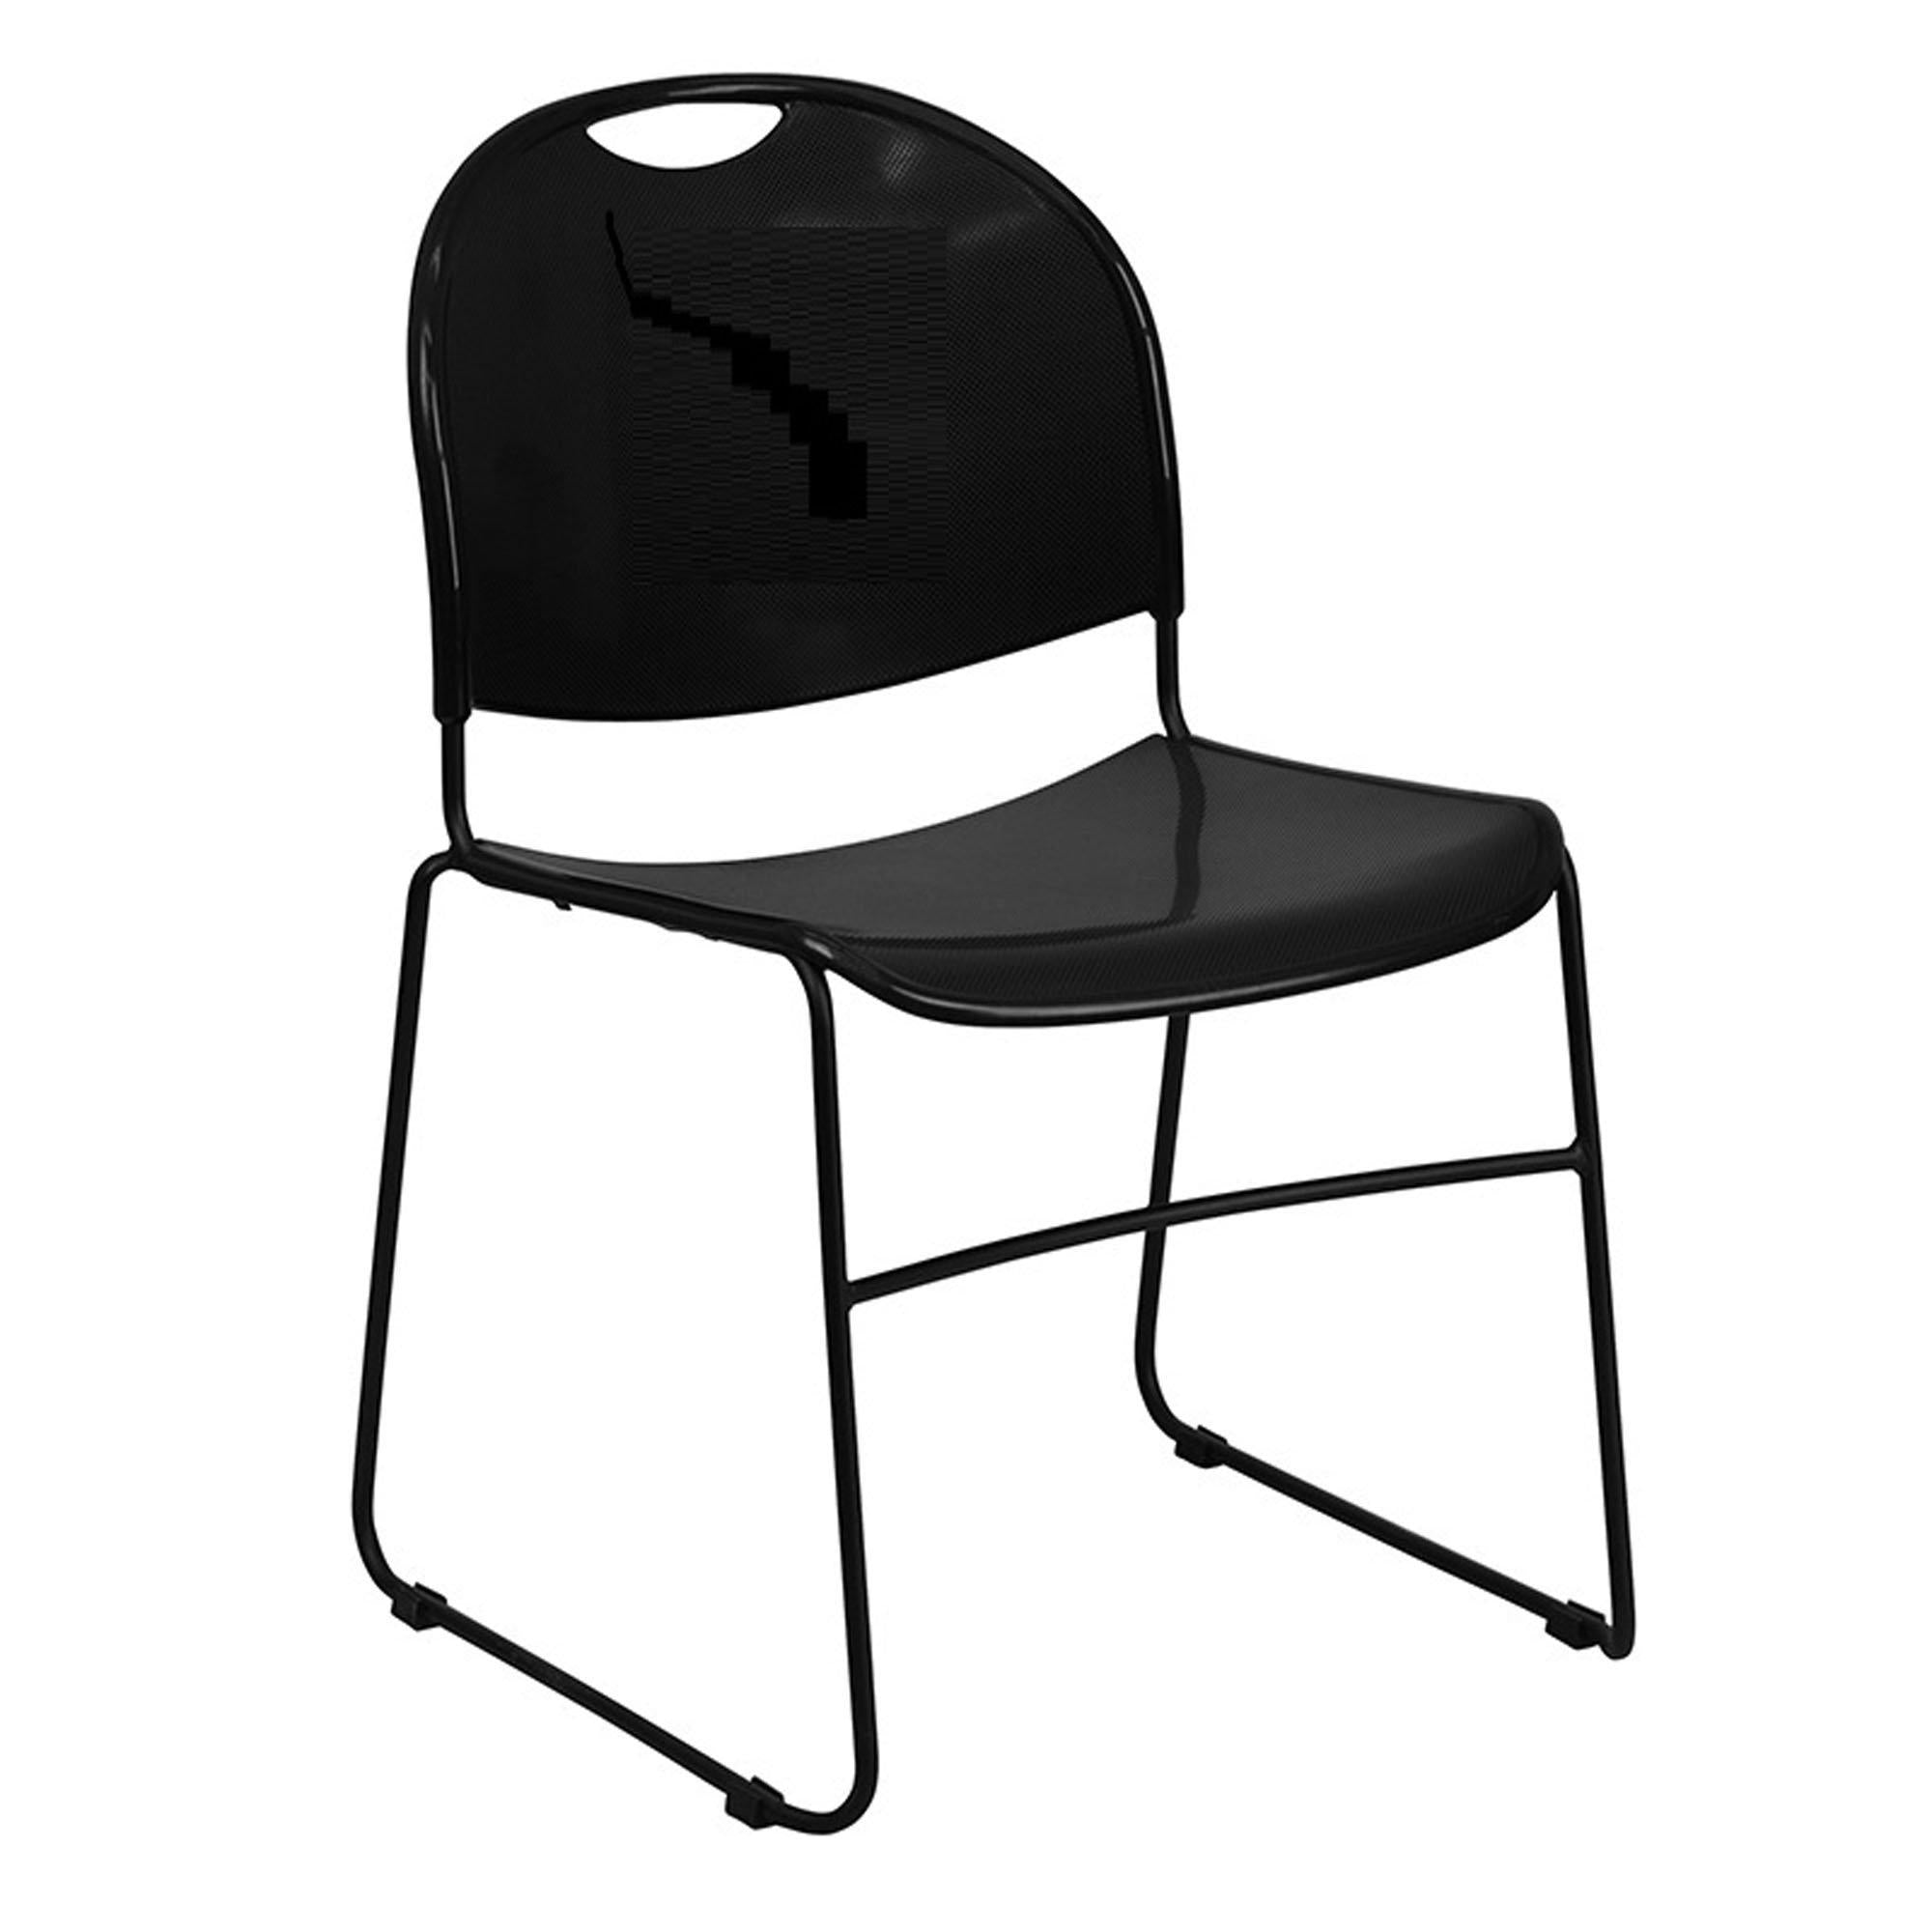 Nextgen High-Density Ultra Compact Stack Chair, 880 lb. Capacity, Black Powder-Coated Frame